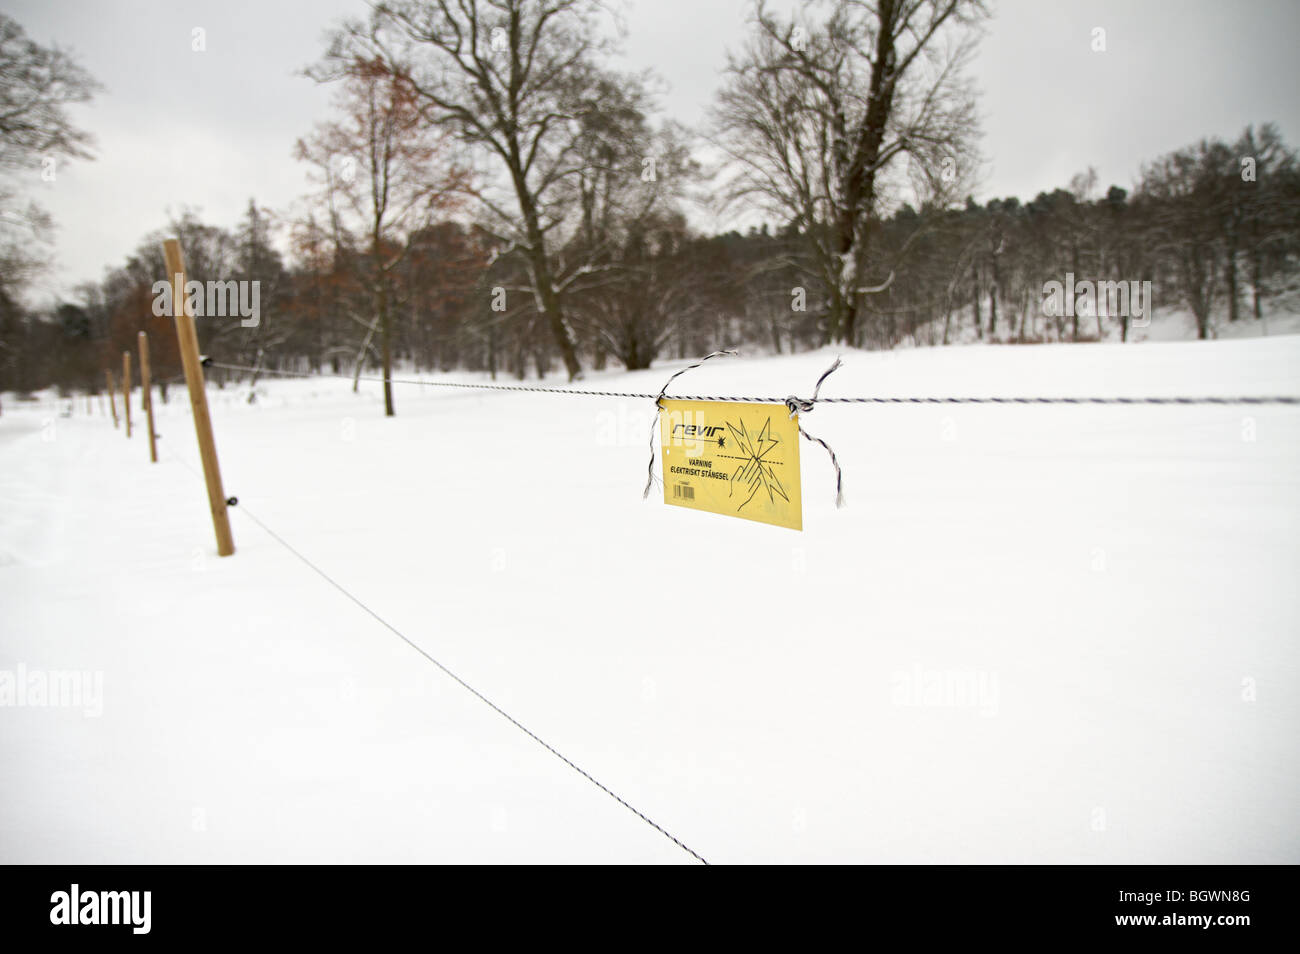 Elektrozaun mit Warnschild im winter Stockfoto